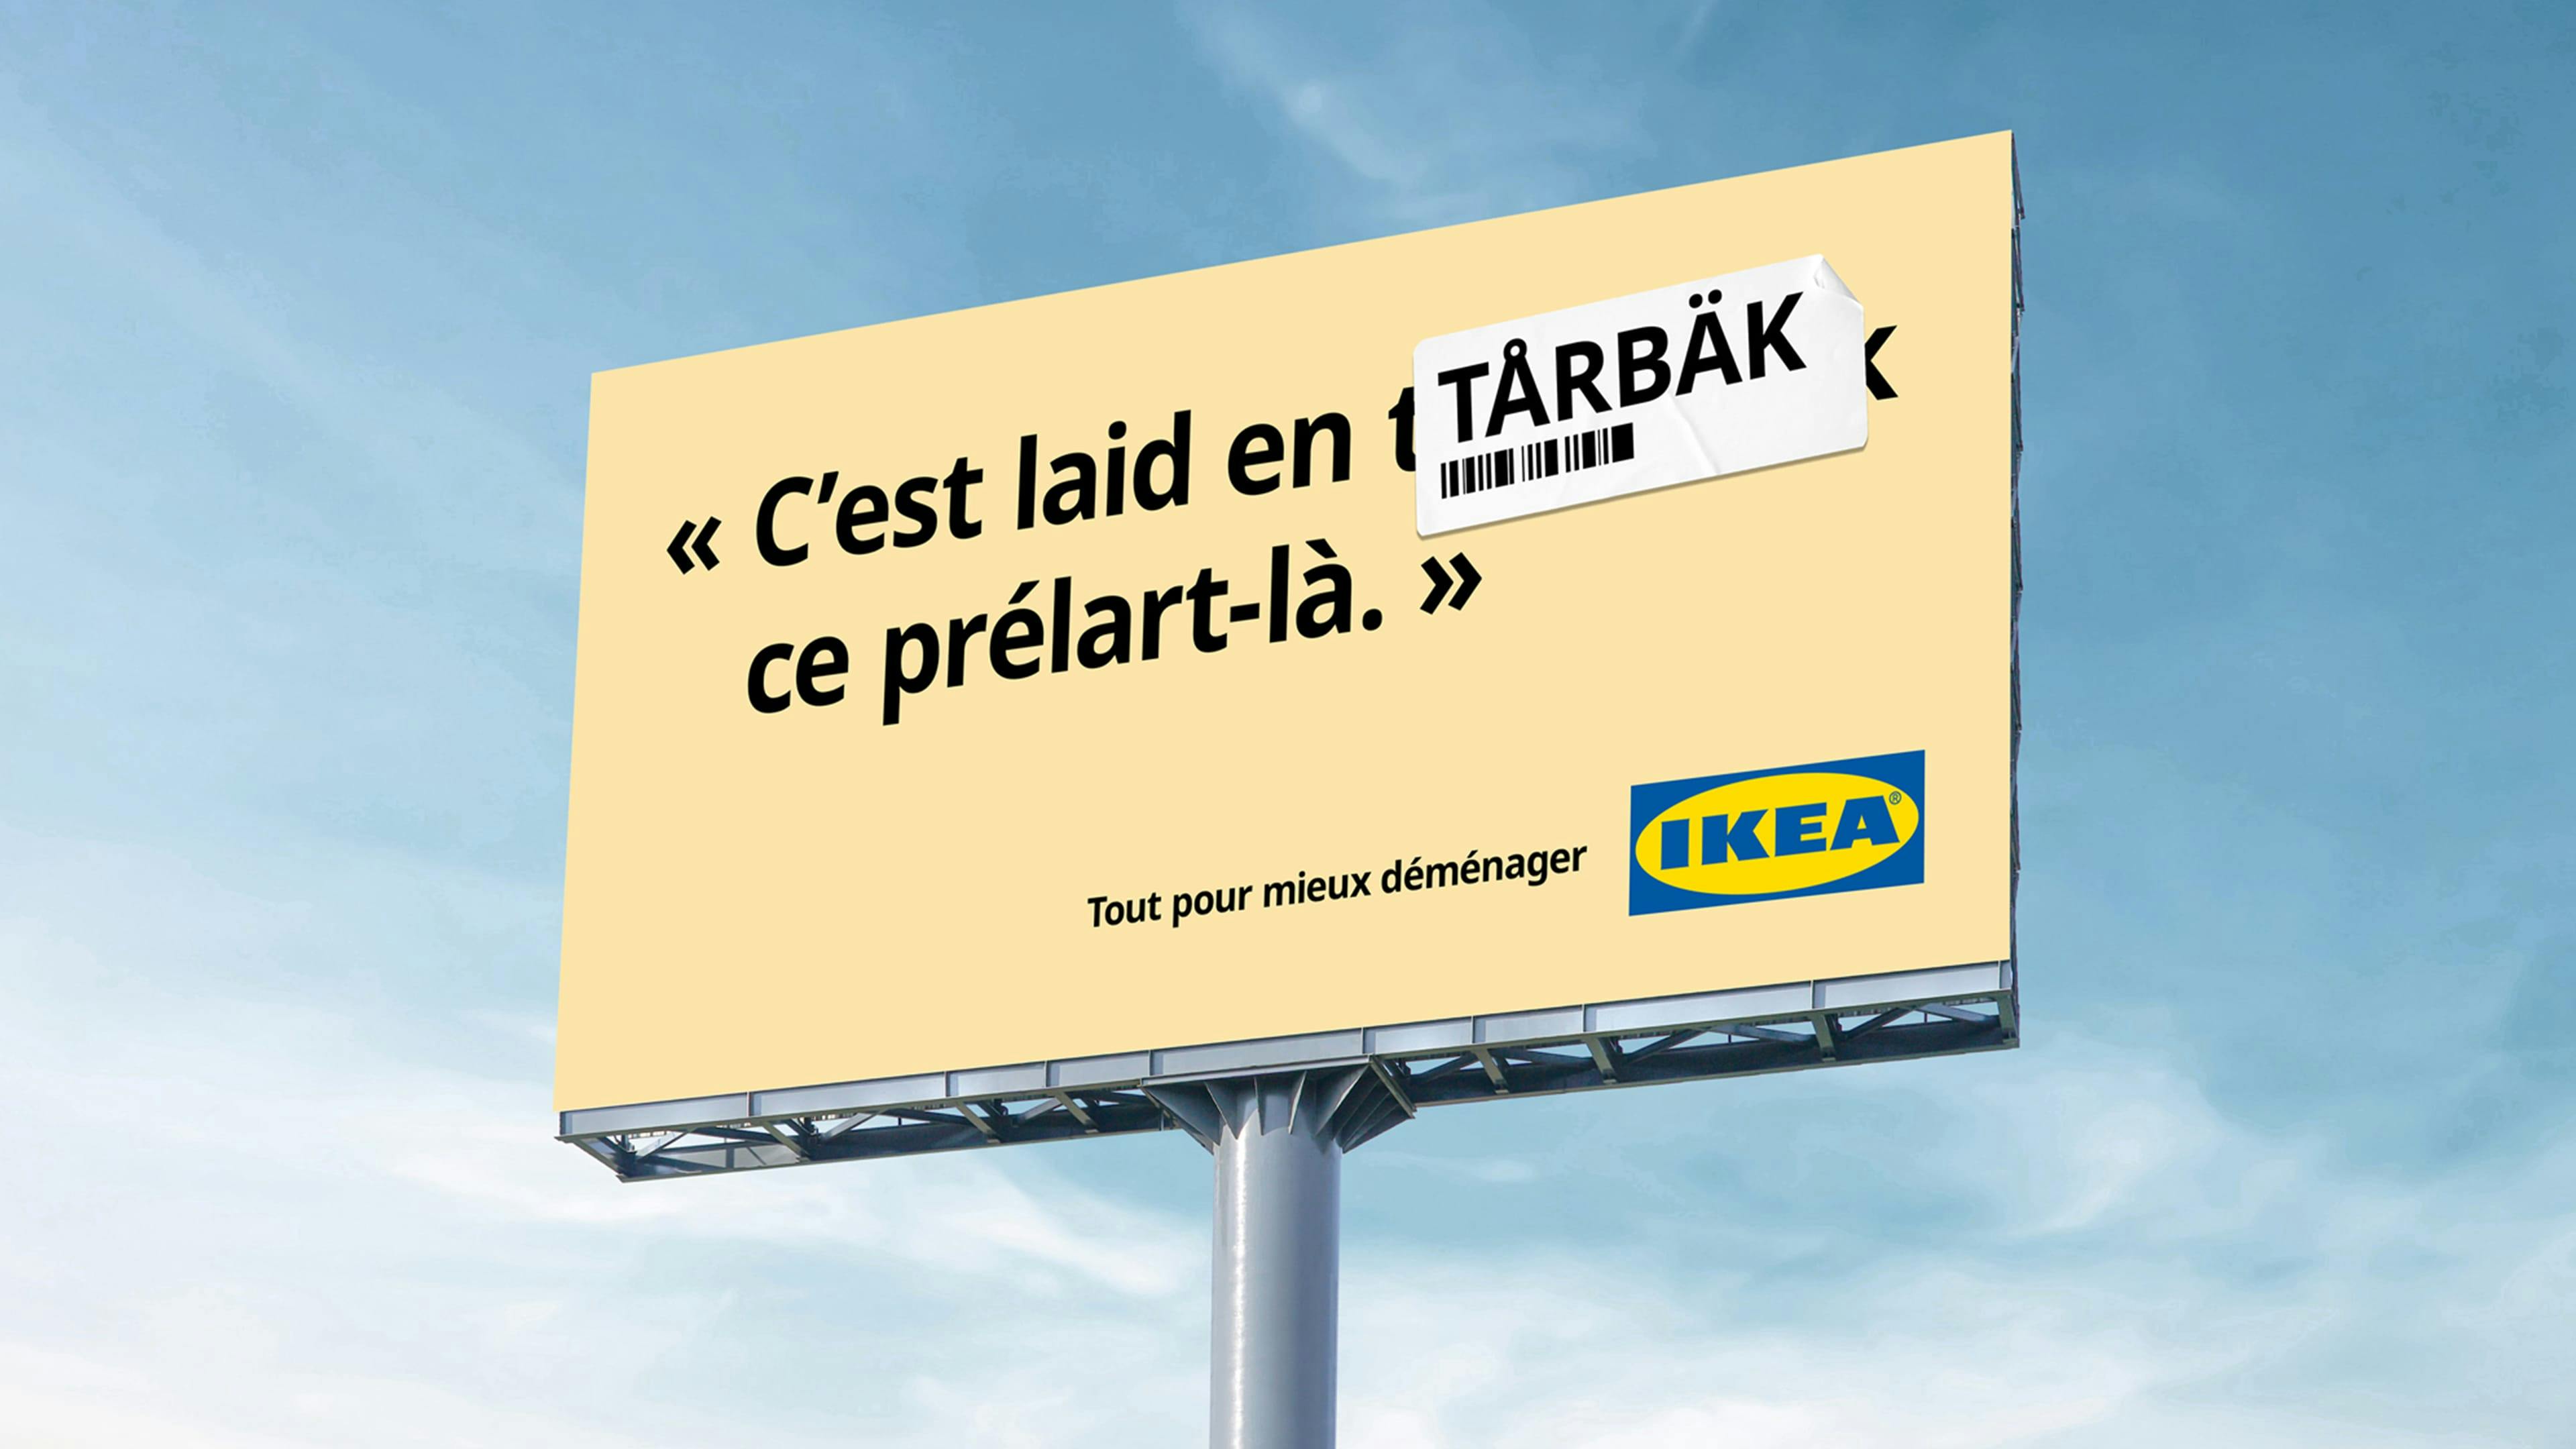 IKEA billboard "Tarbak"